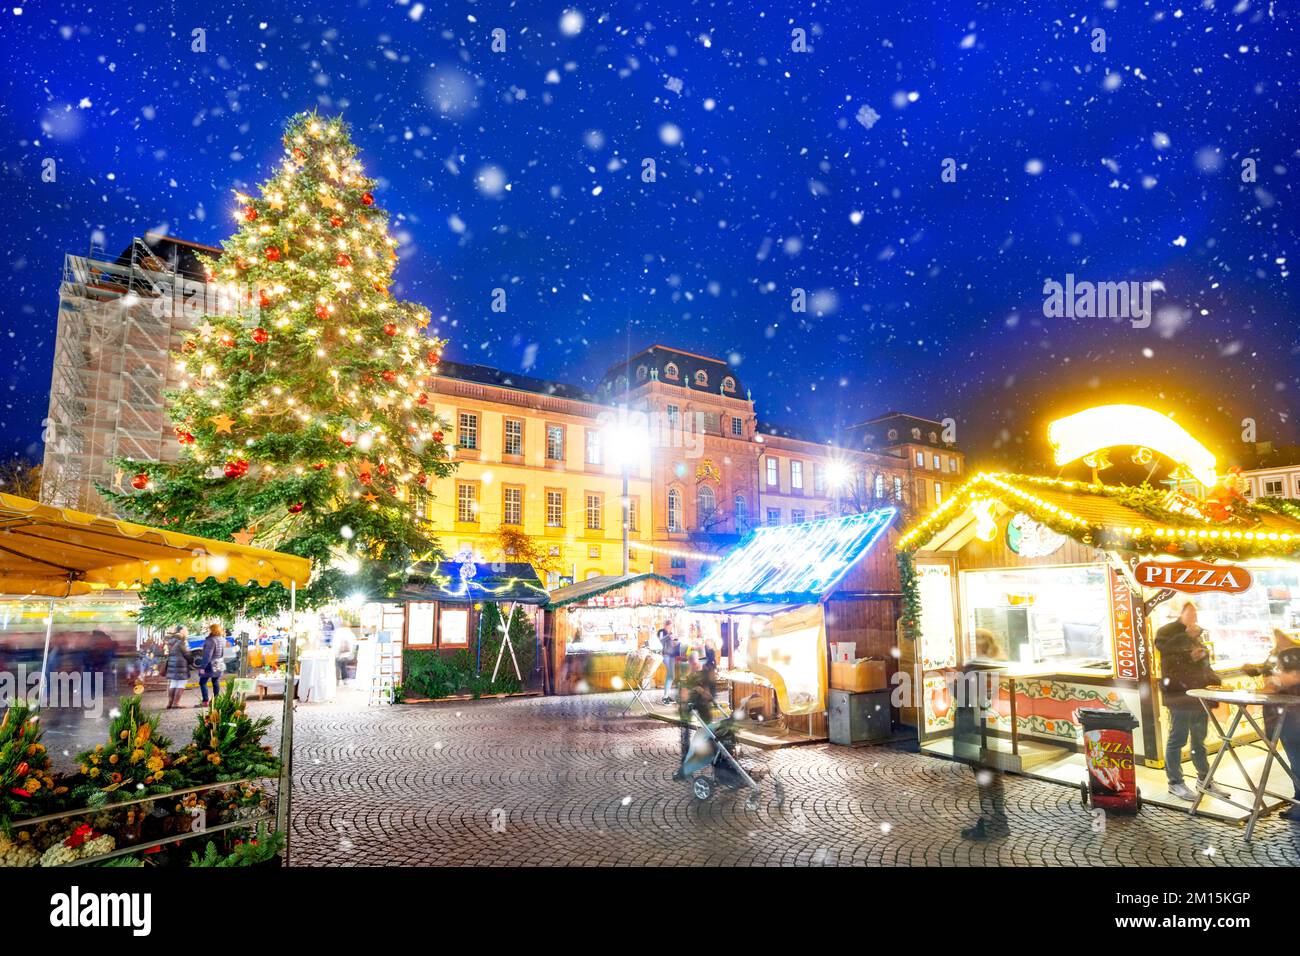 Christmas Market in Darmstadt, Germany Stock Photo